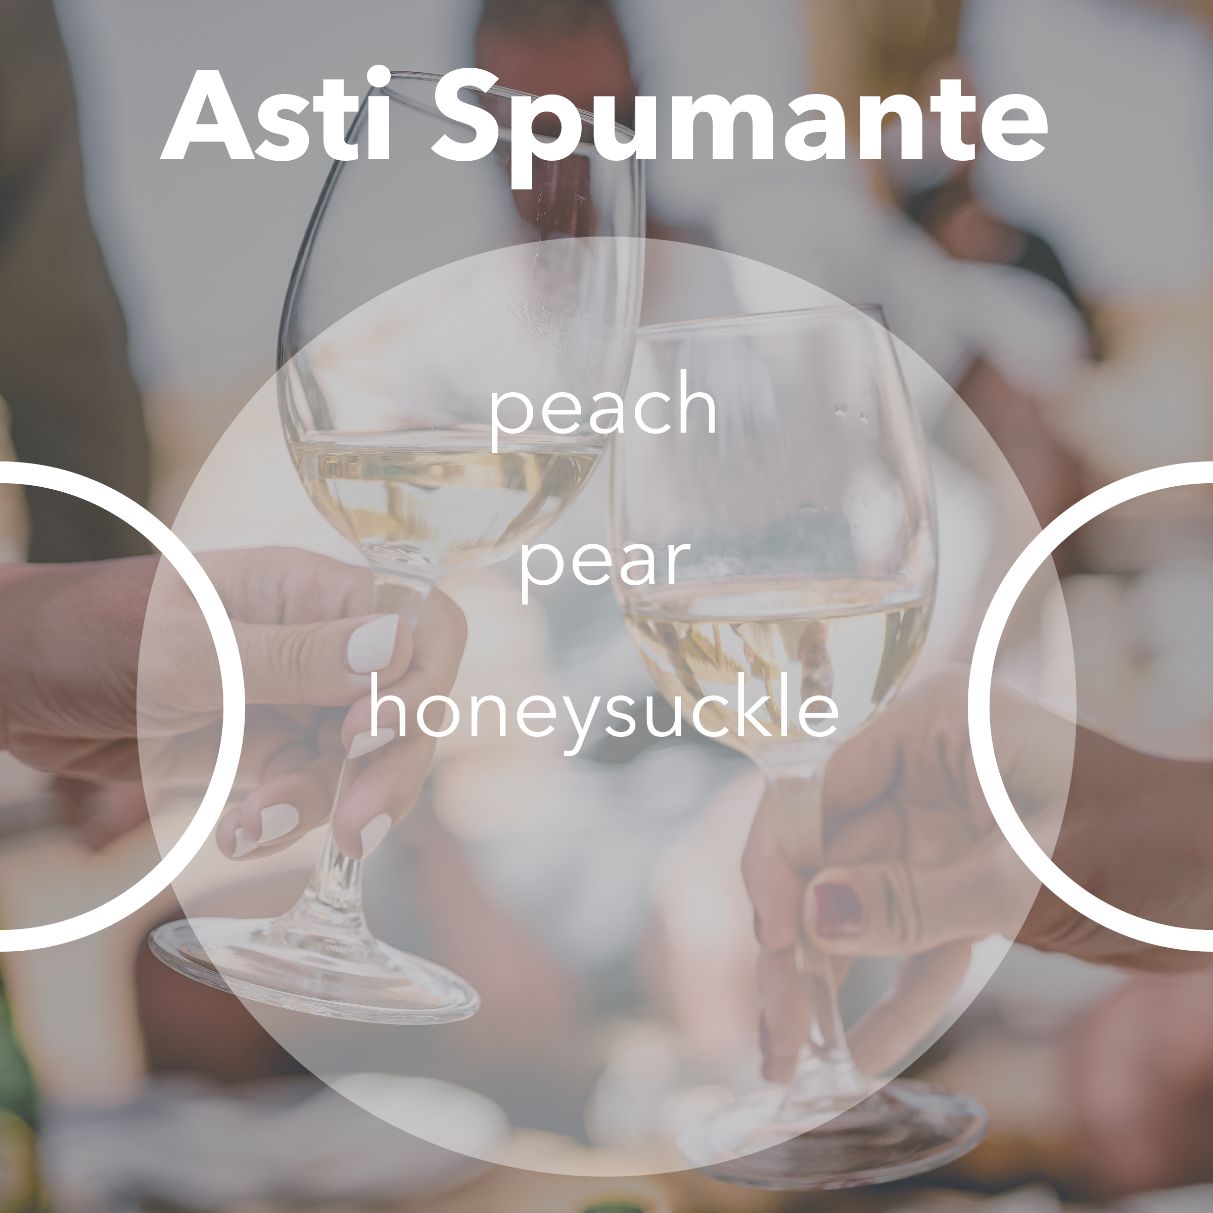 Asti Spumante wine tasting notes